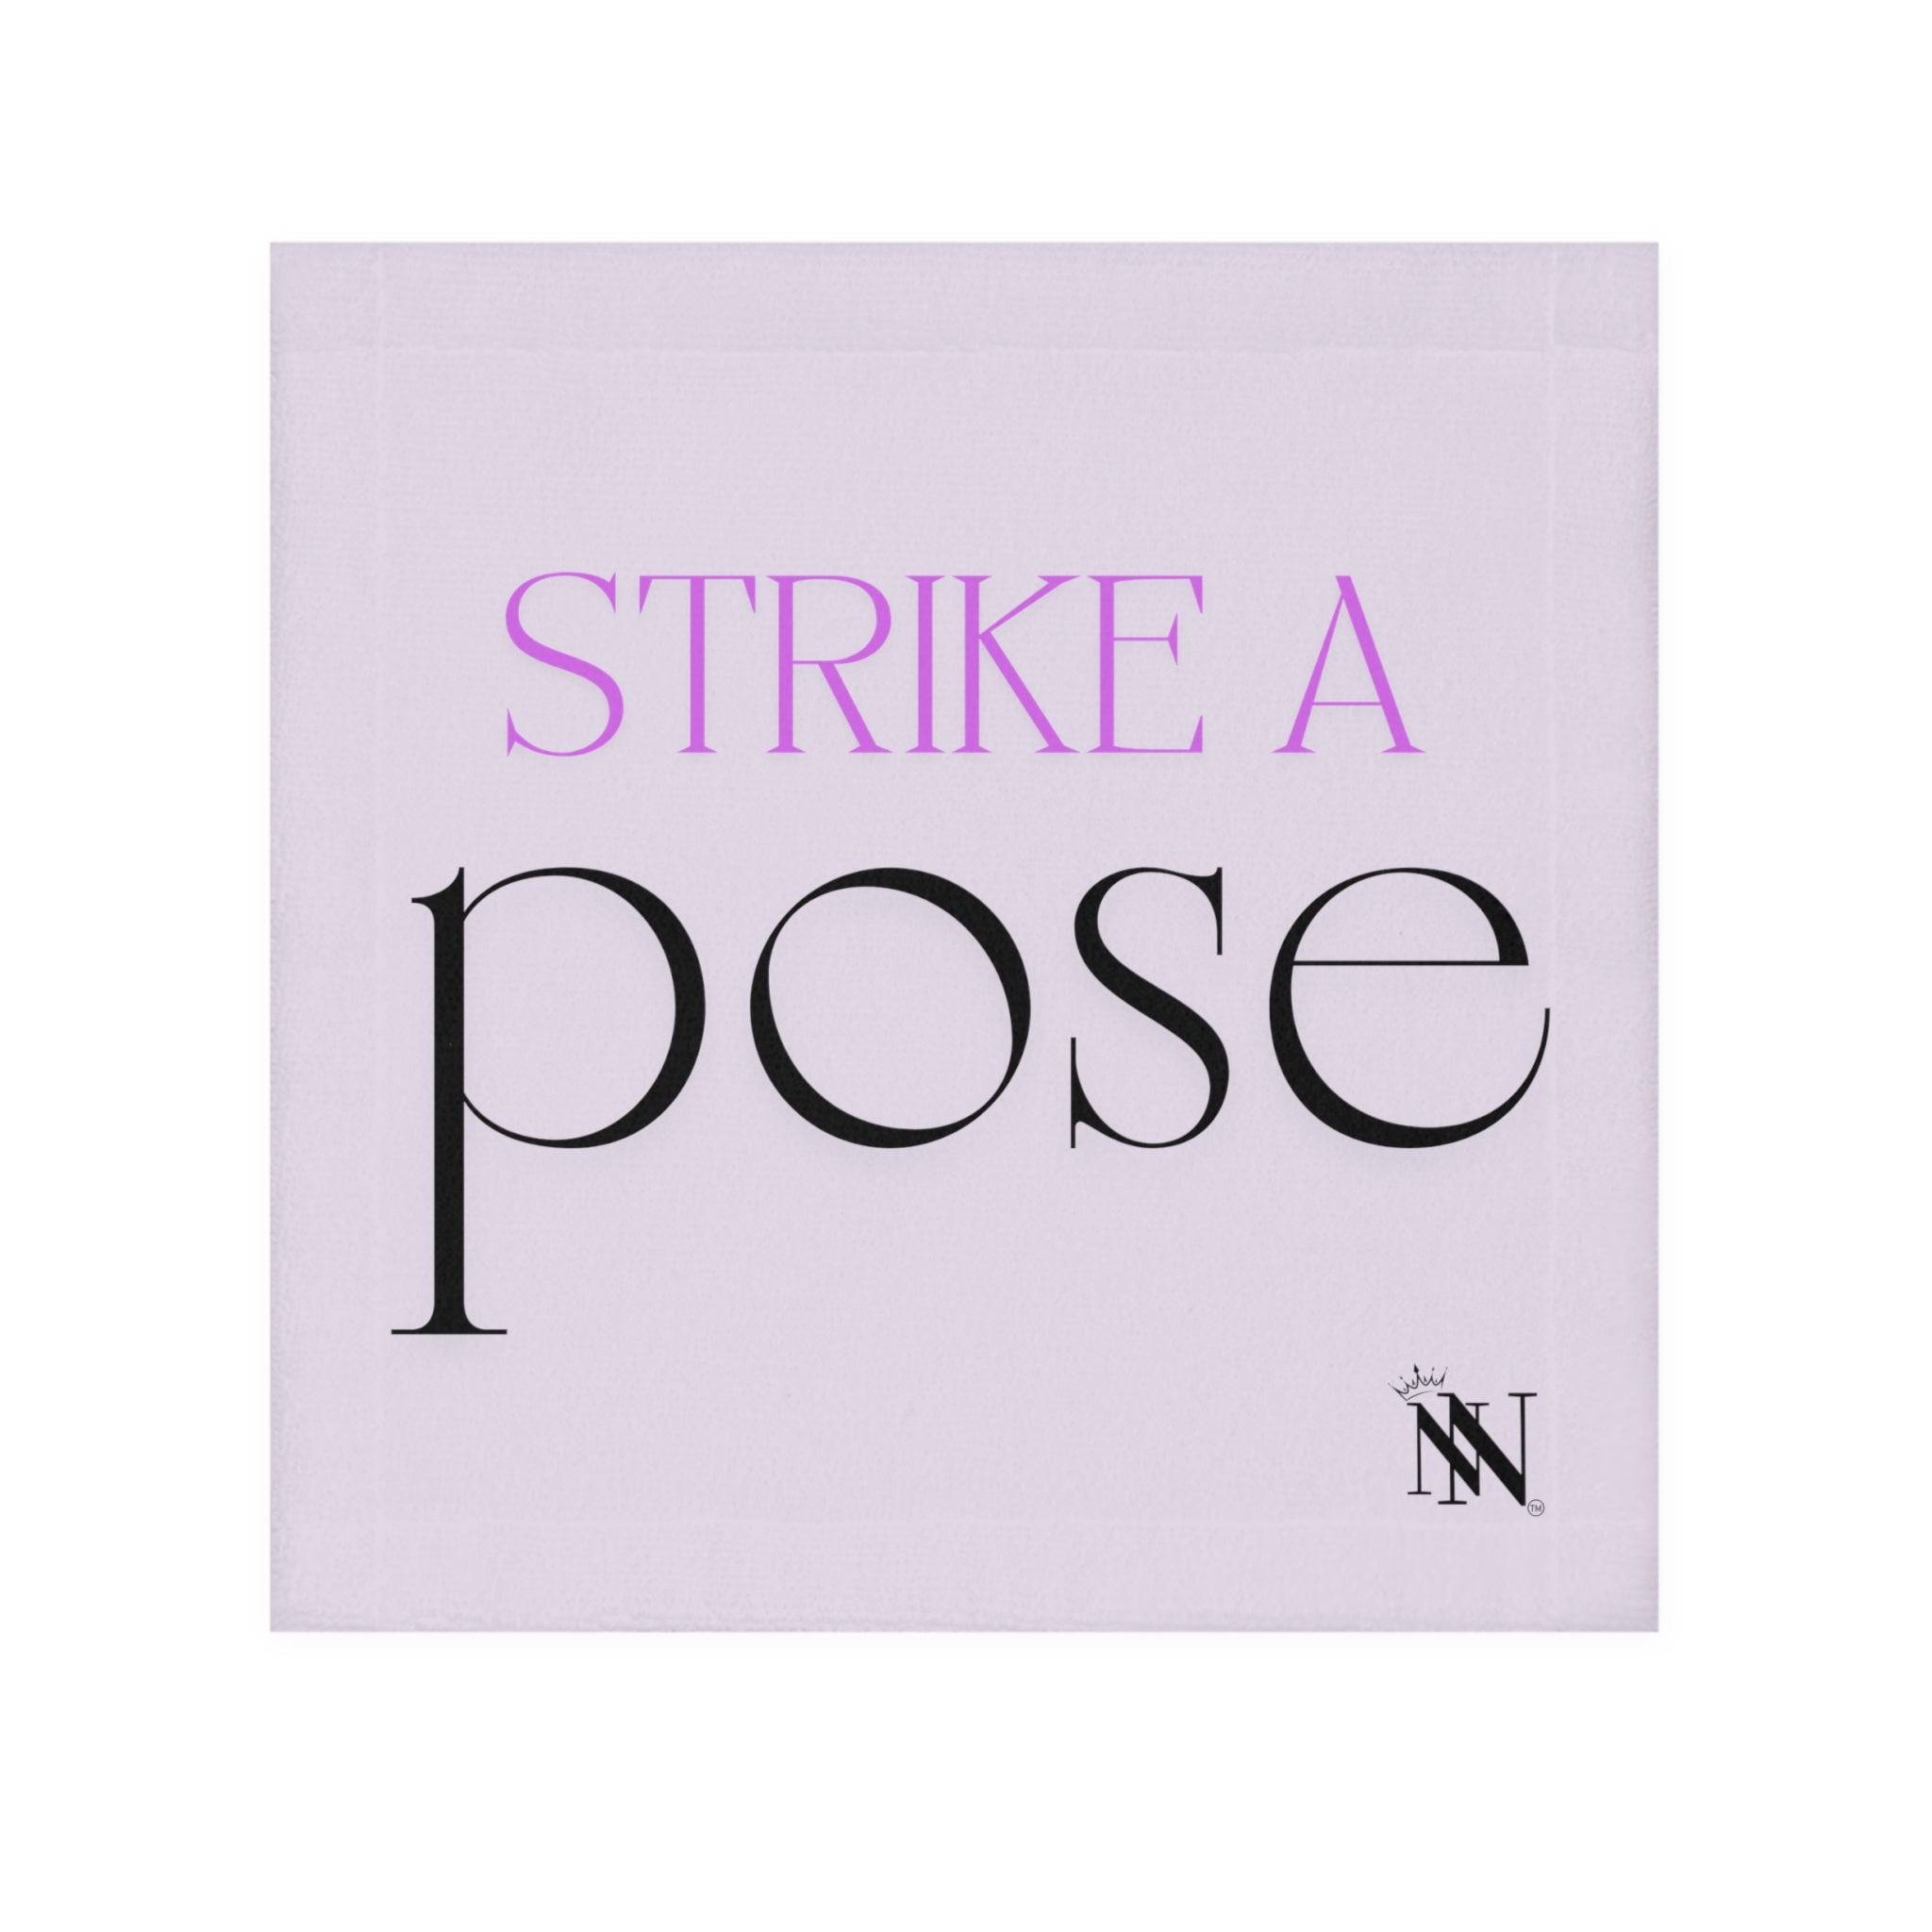 Strike a pose sex towel 